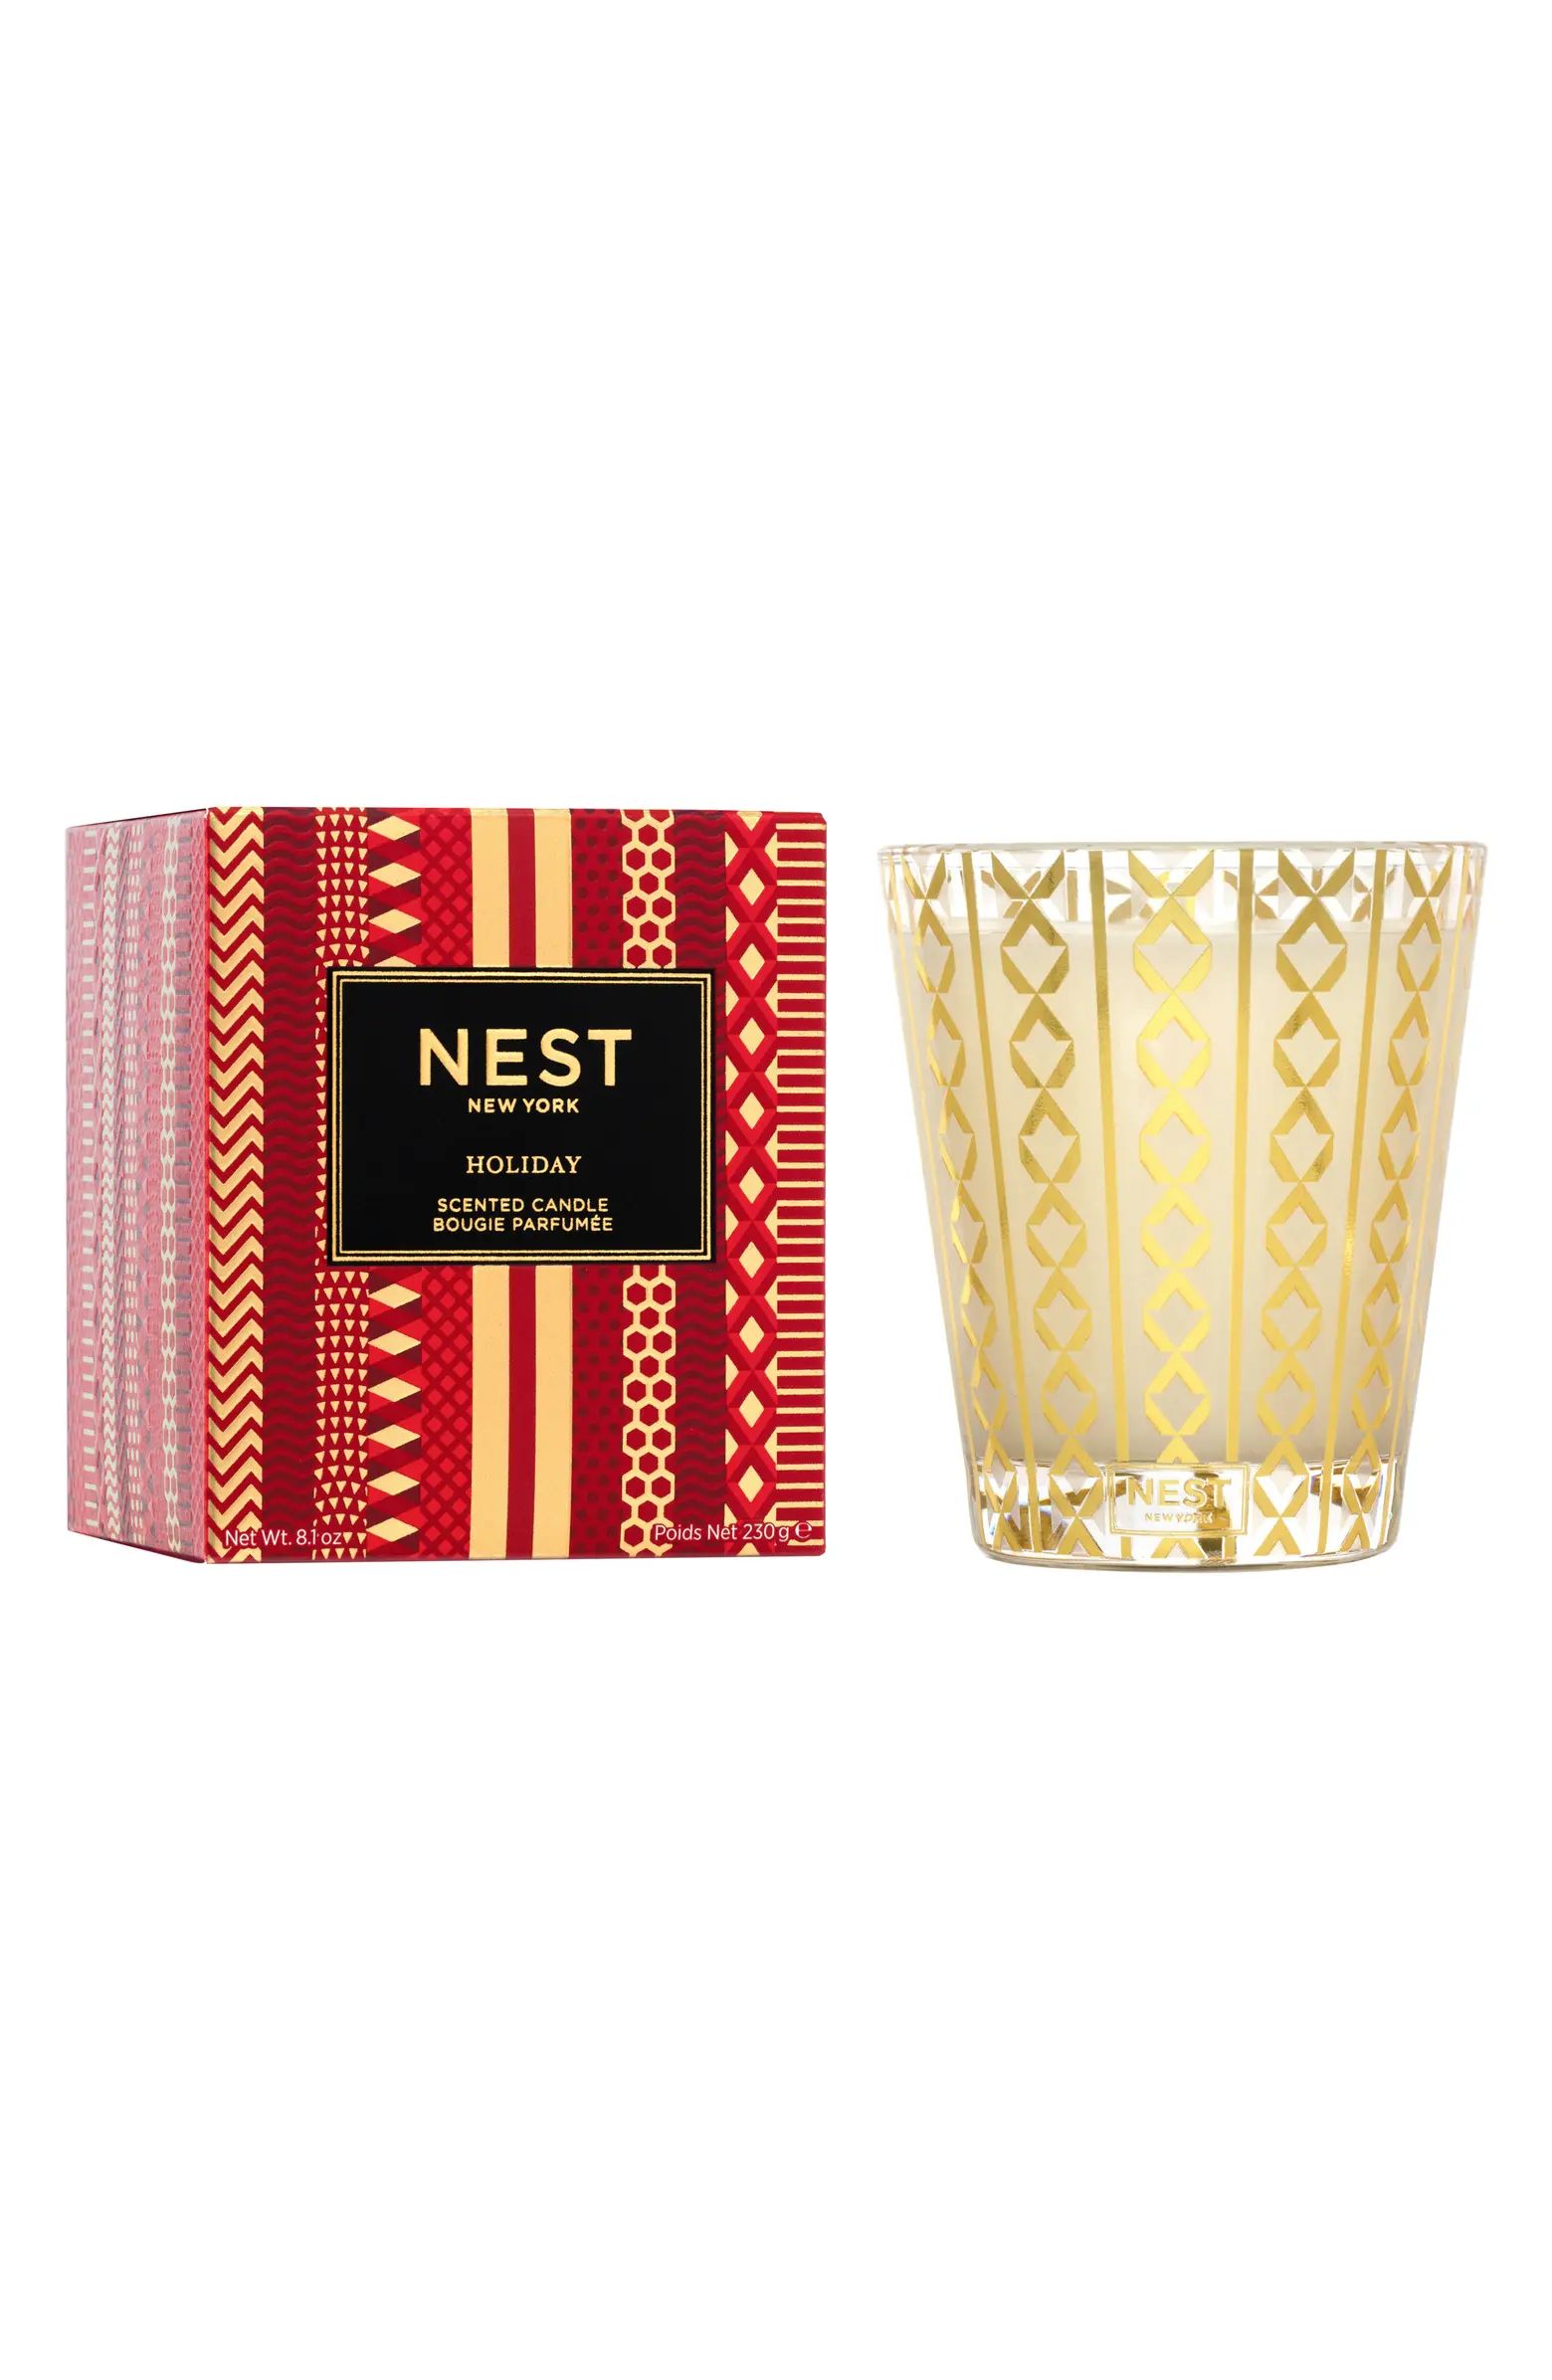 NEST Fragrances Holiday Candle | Nordstrom